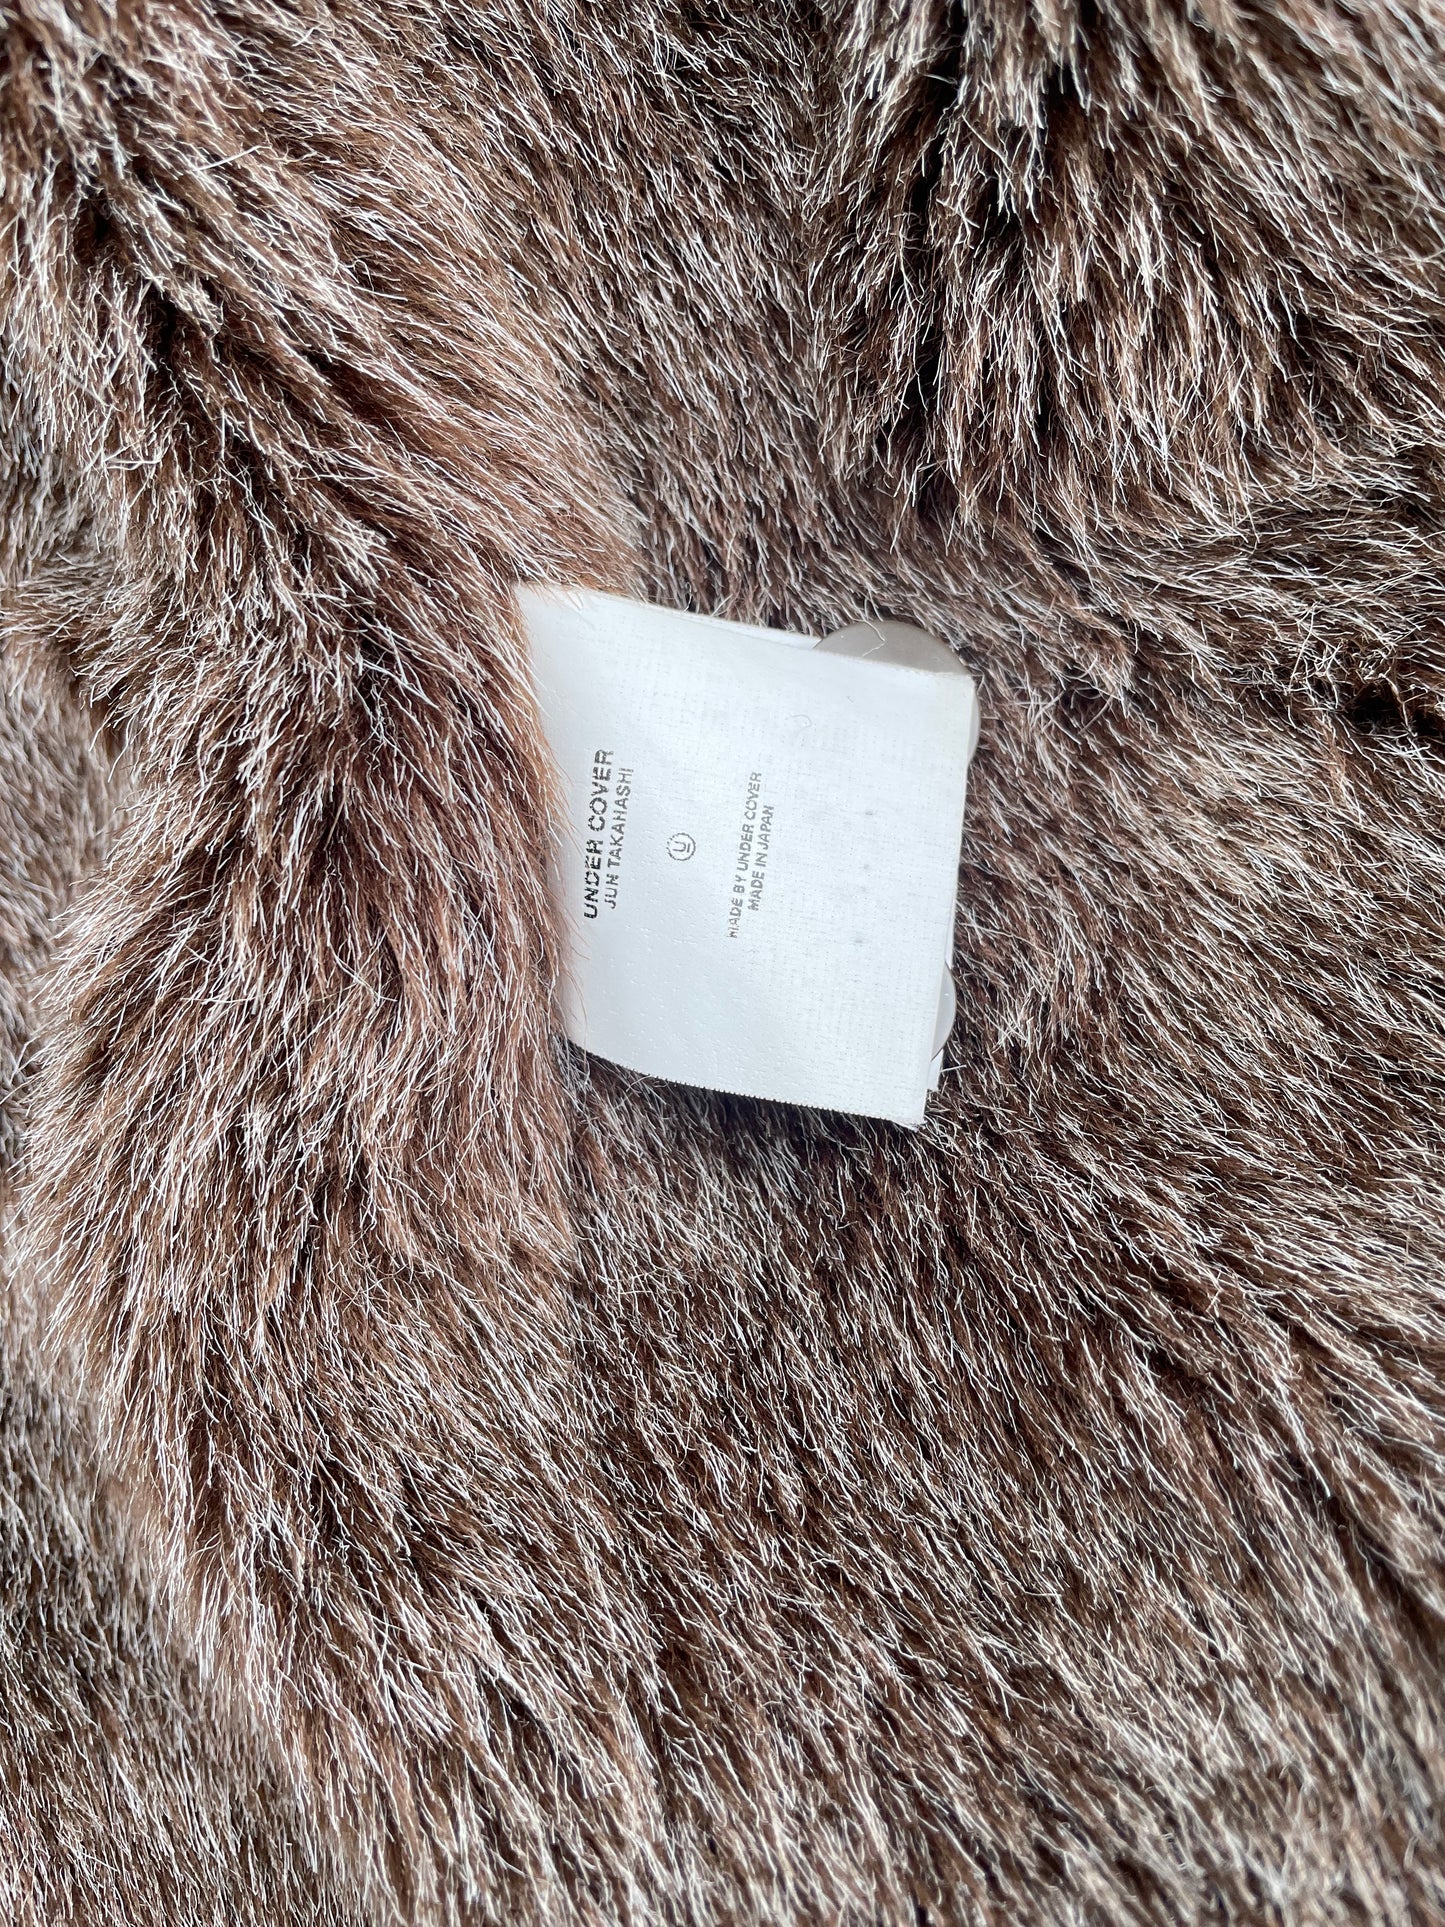 AW03 “Paperdoll” - Undercover Osama Bin Laden Camouflage Rabbit Fur Jacket